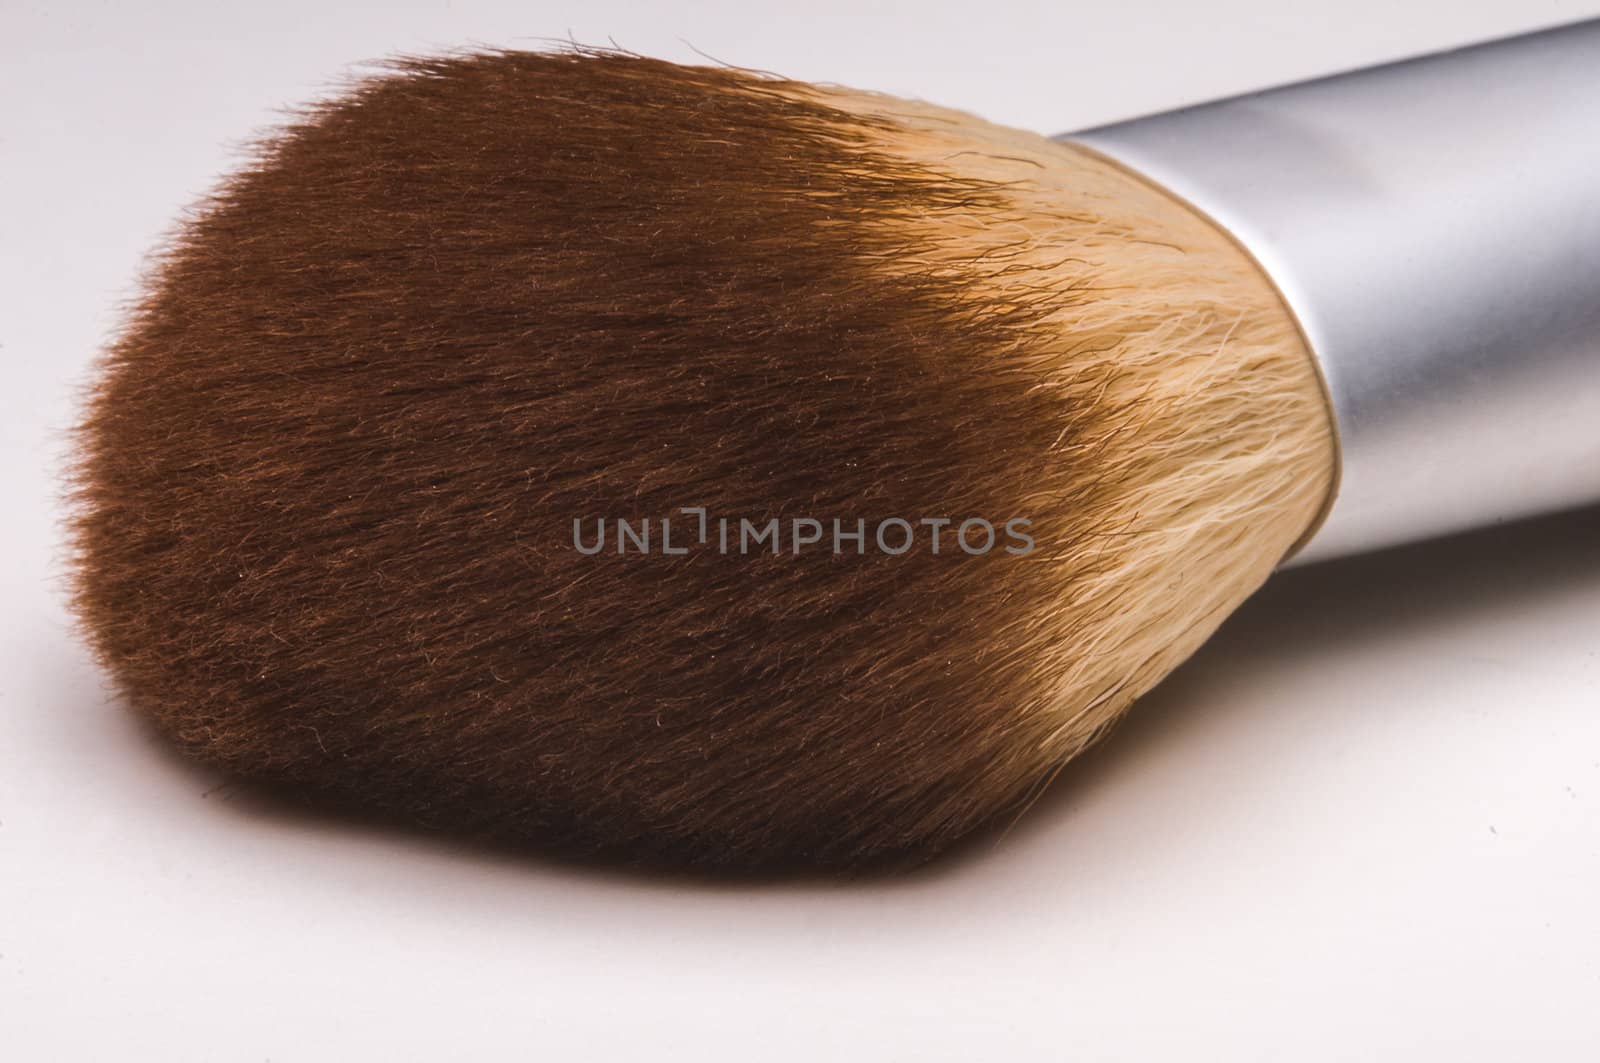 Make-up brush on white background. by Shane9